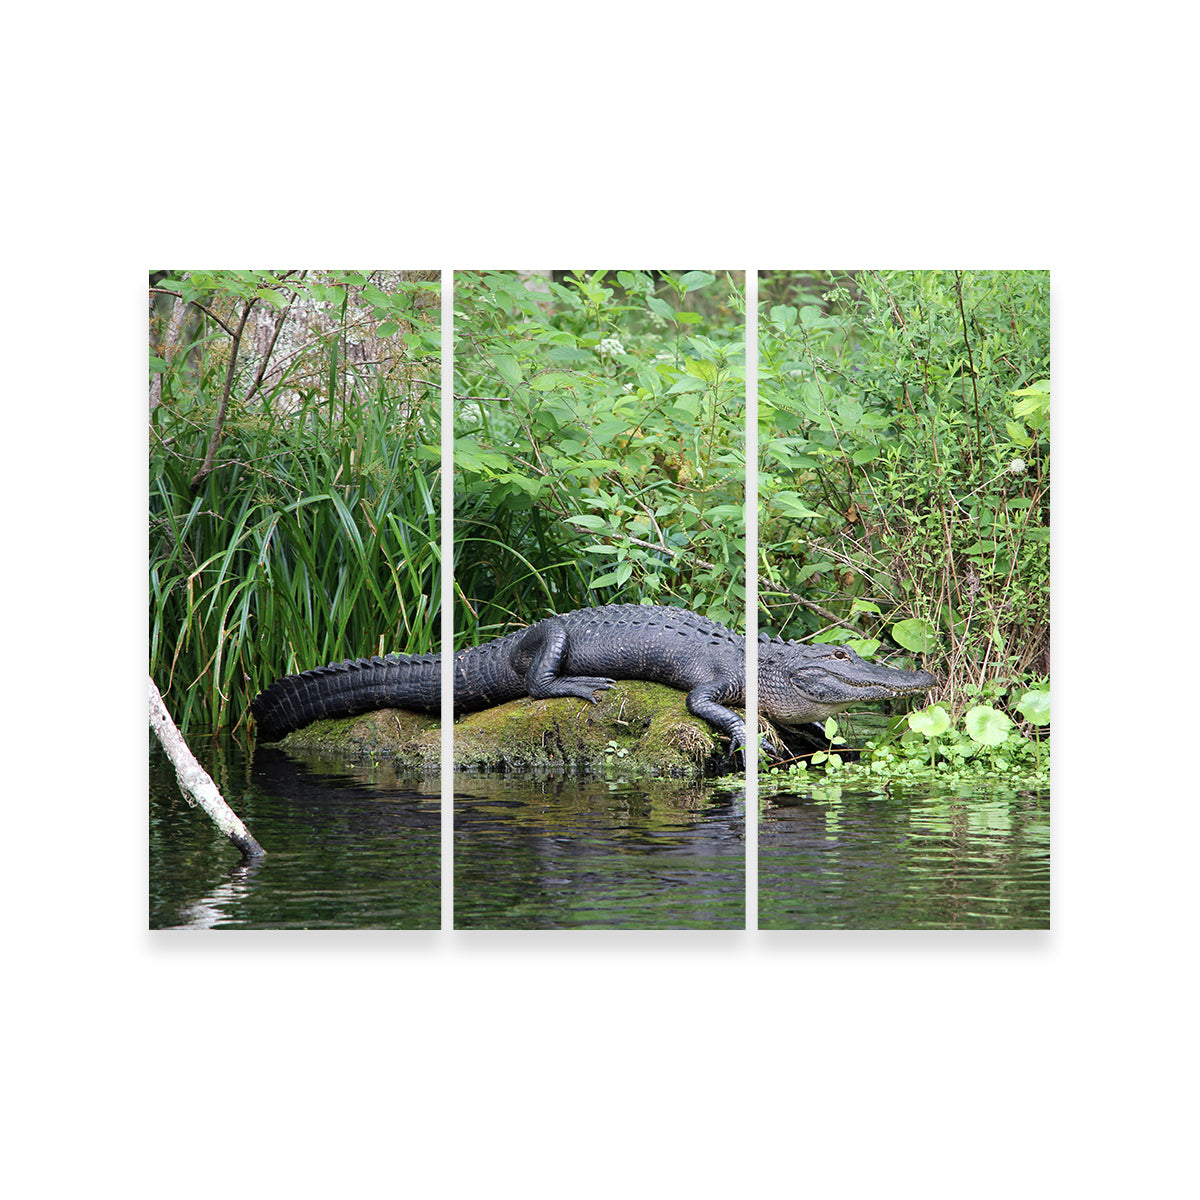 Florida Alligator - Silver Springs State Park